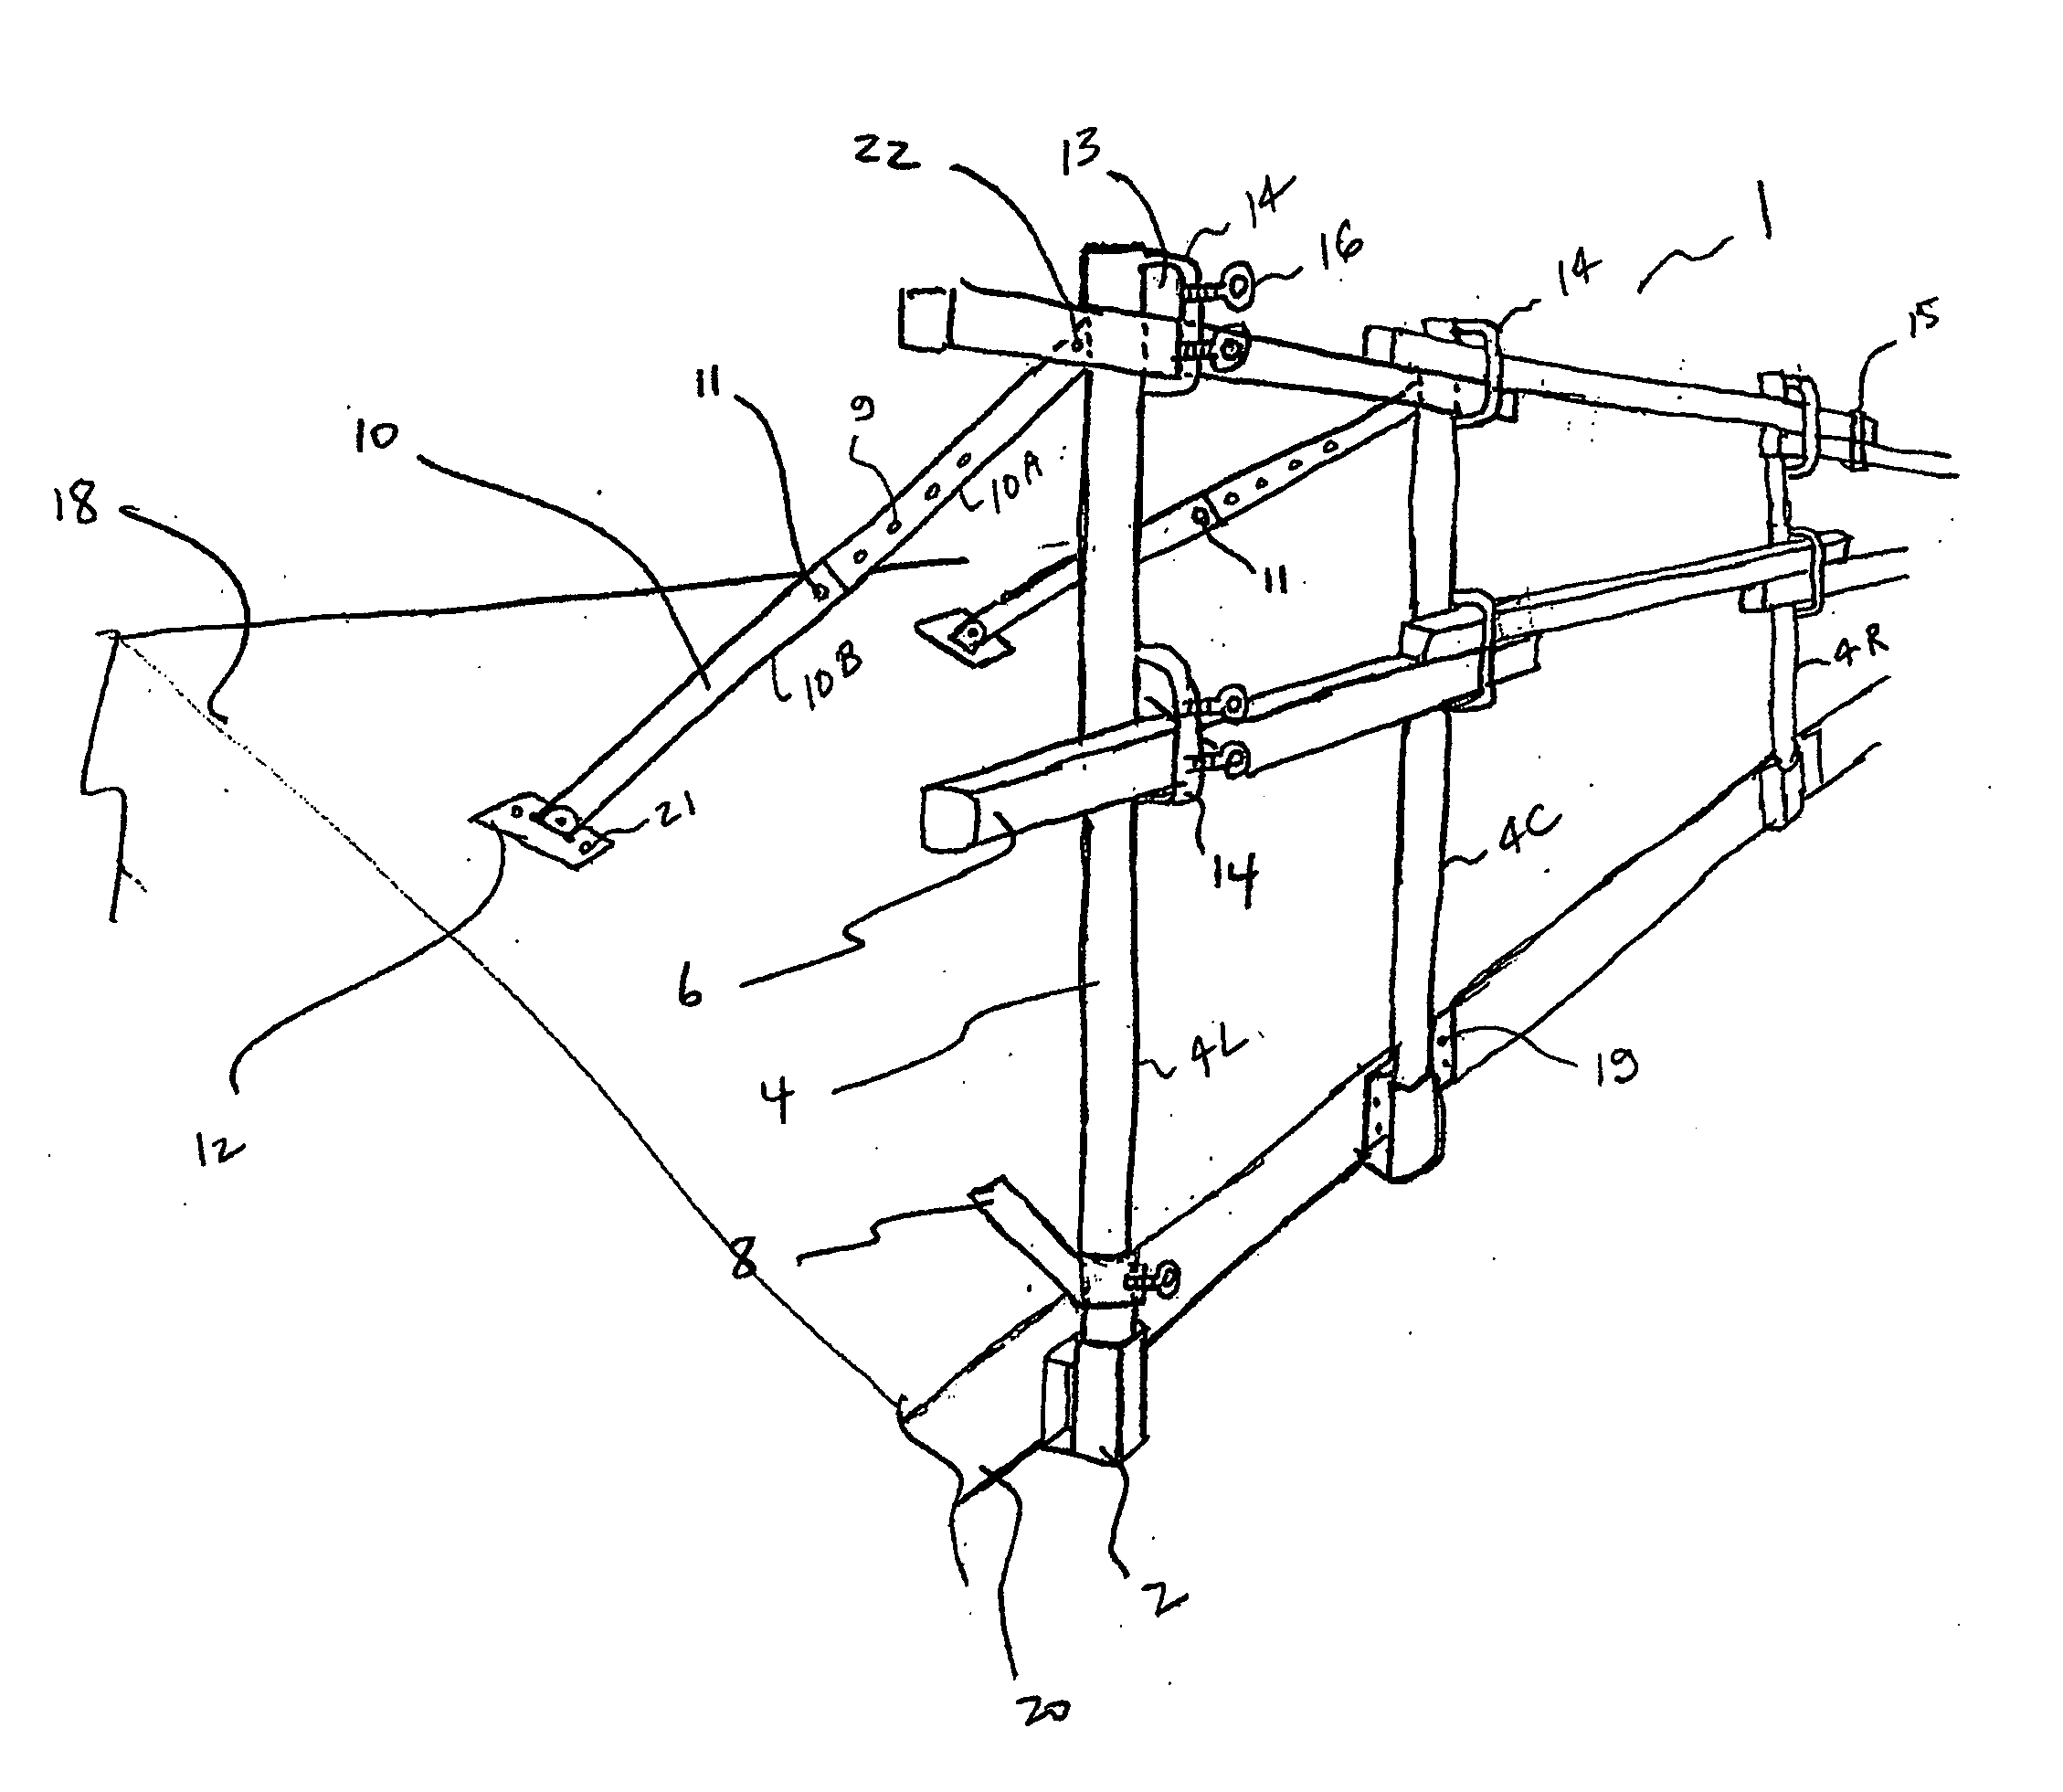 Modular safety railing system